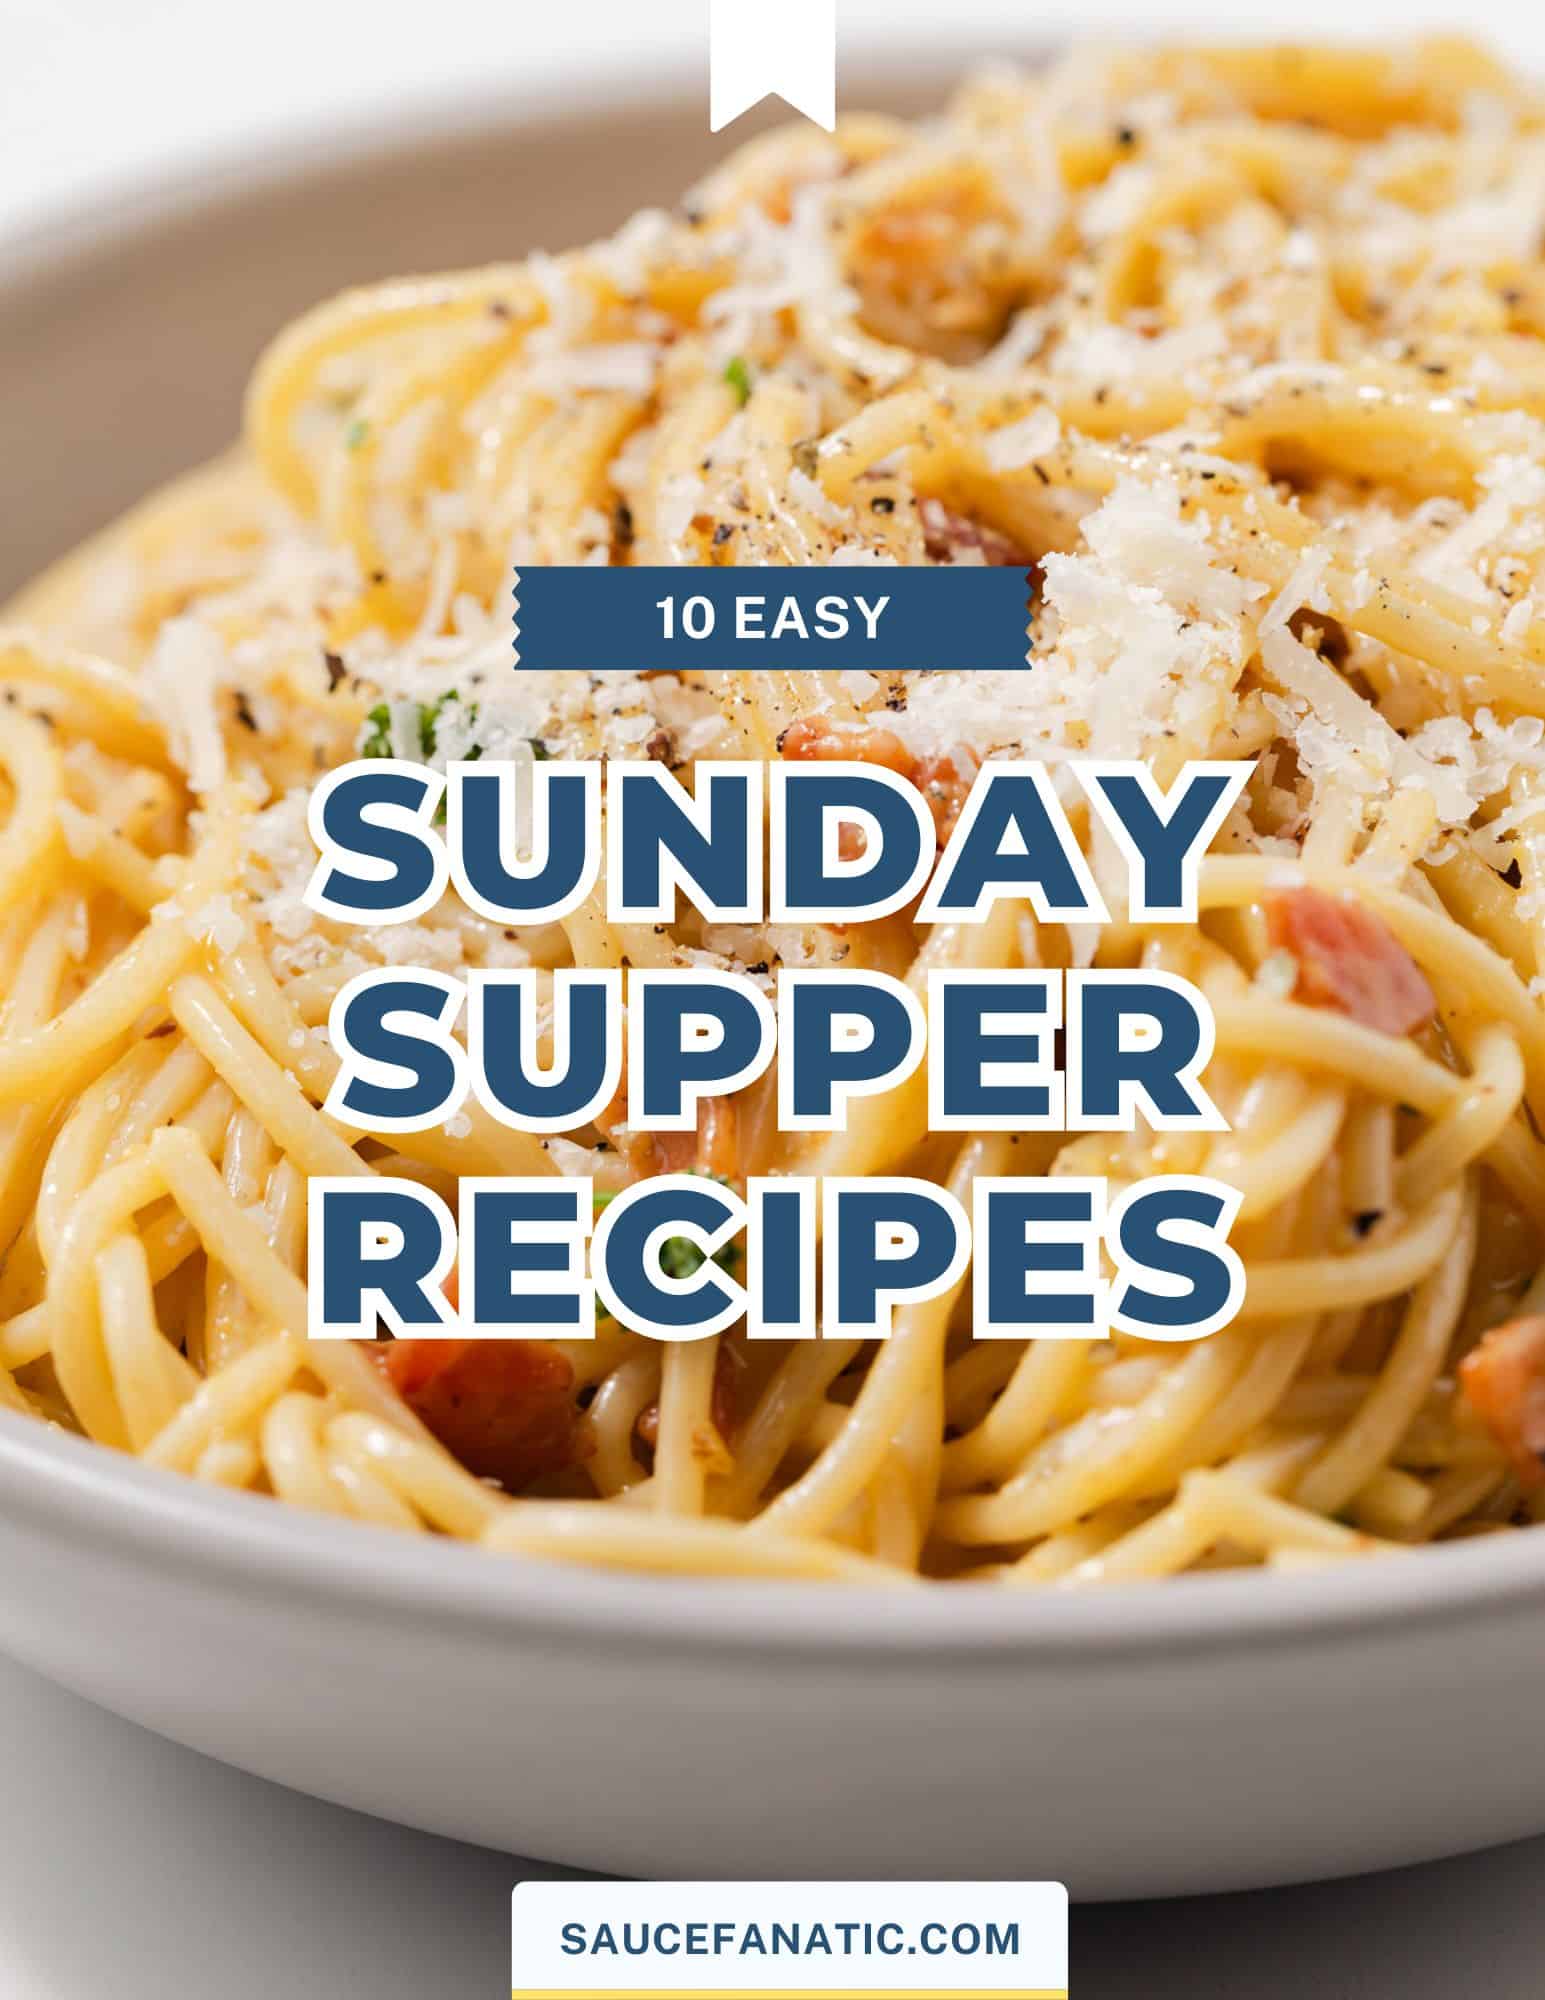 Sunday supper recipes ebook cover.